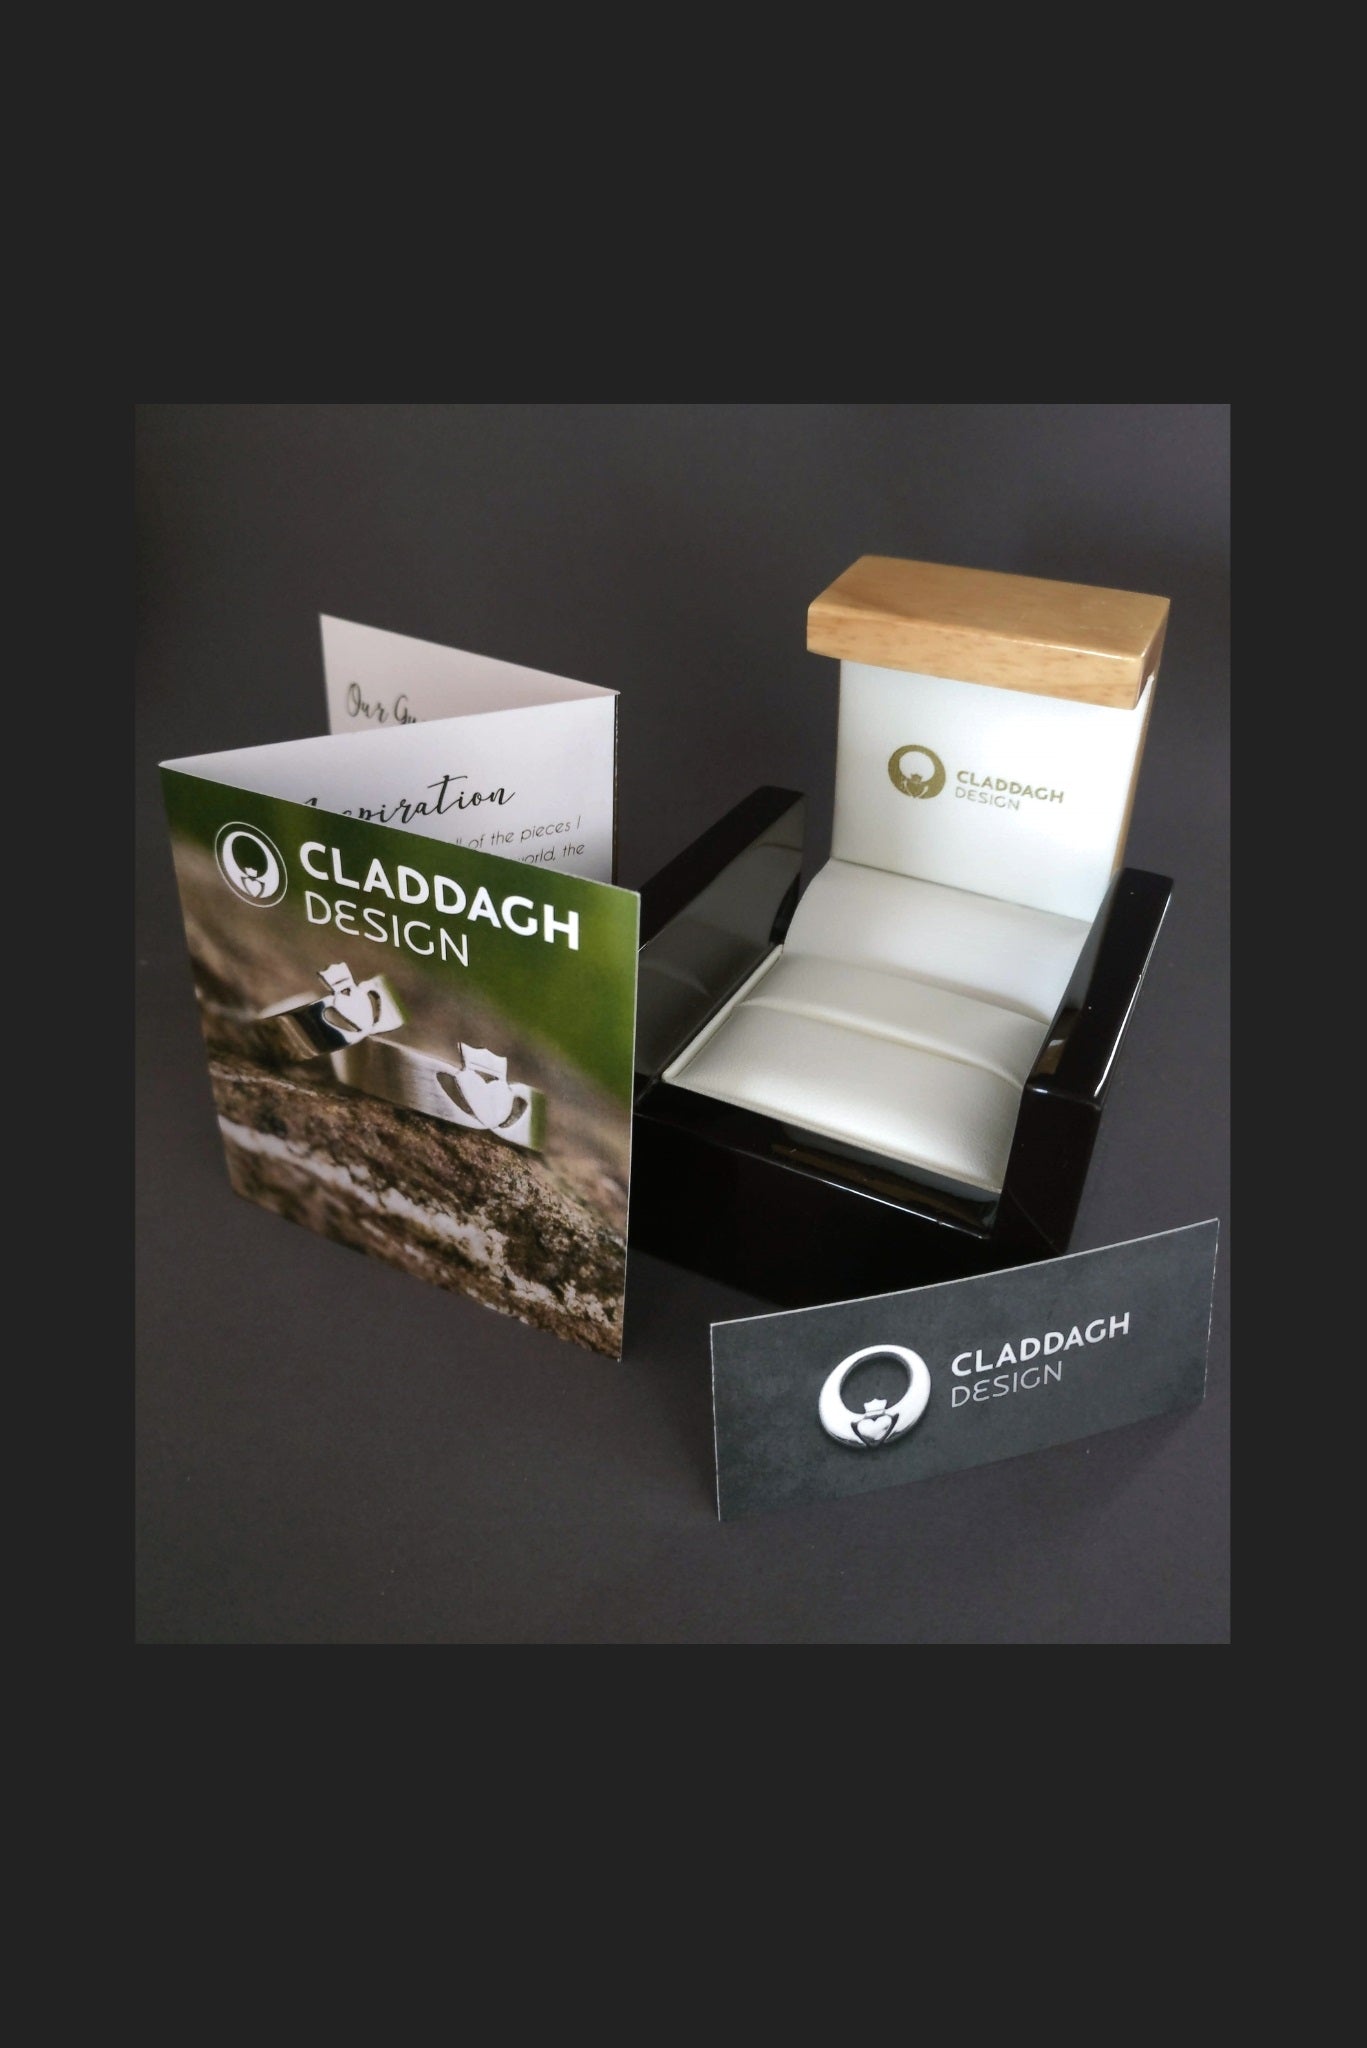 Claddagh design packaging